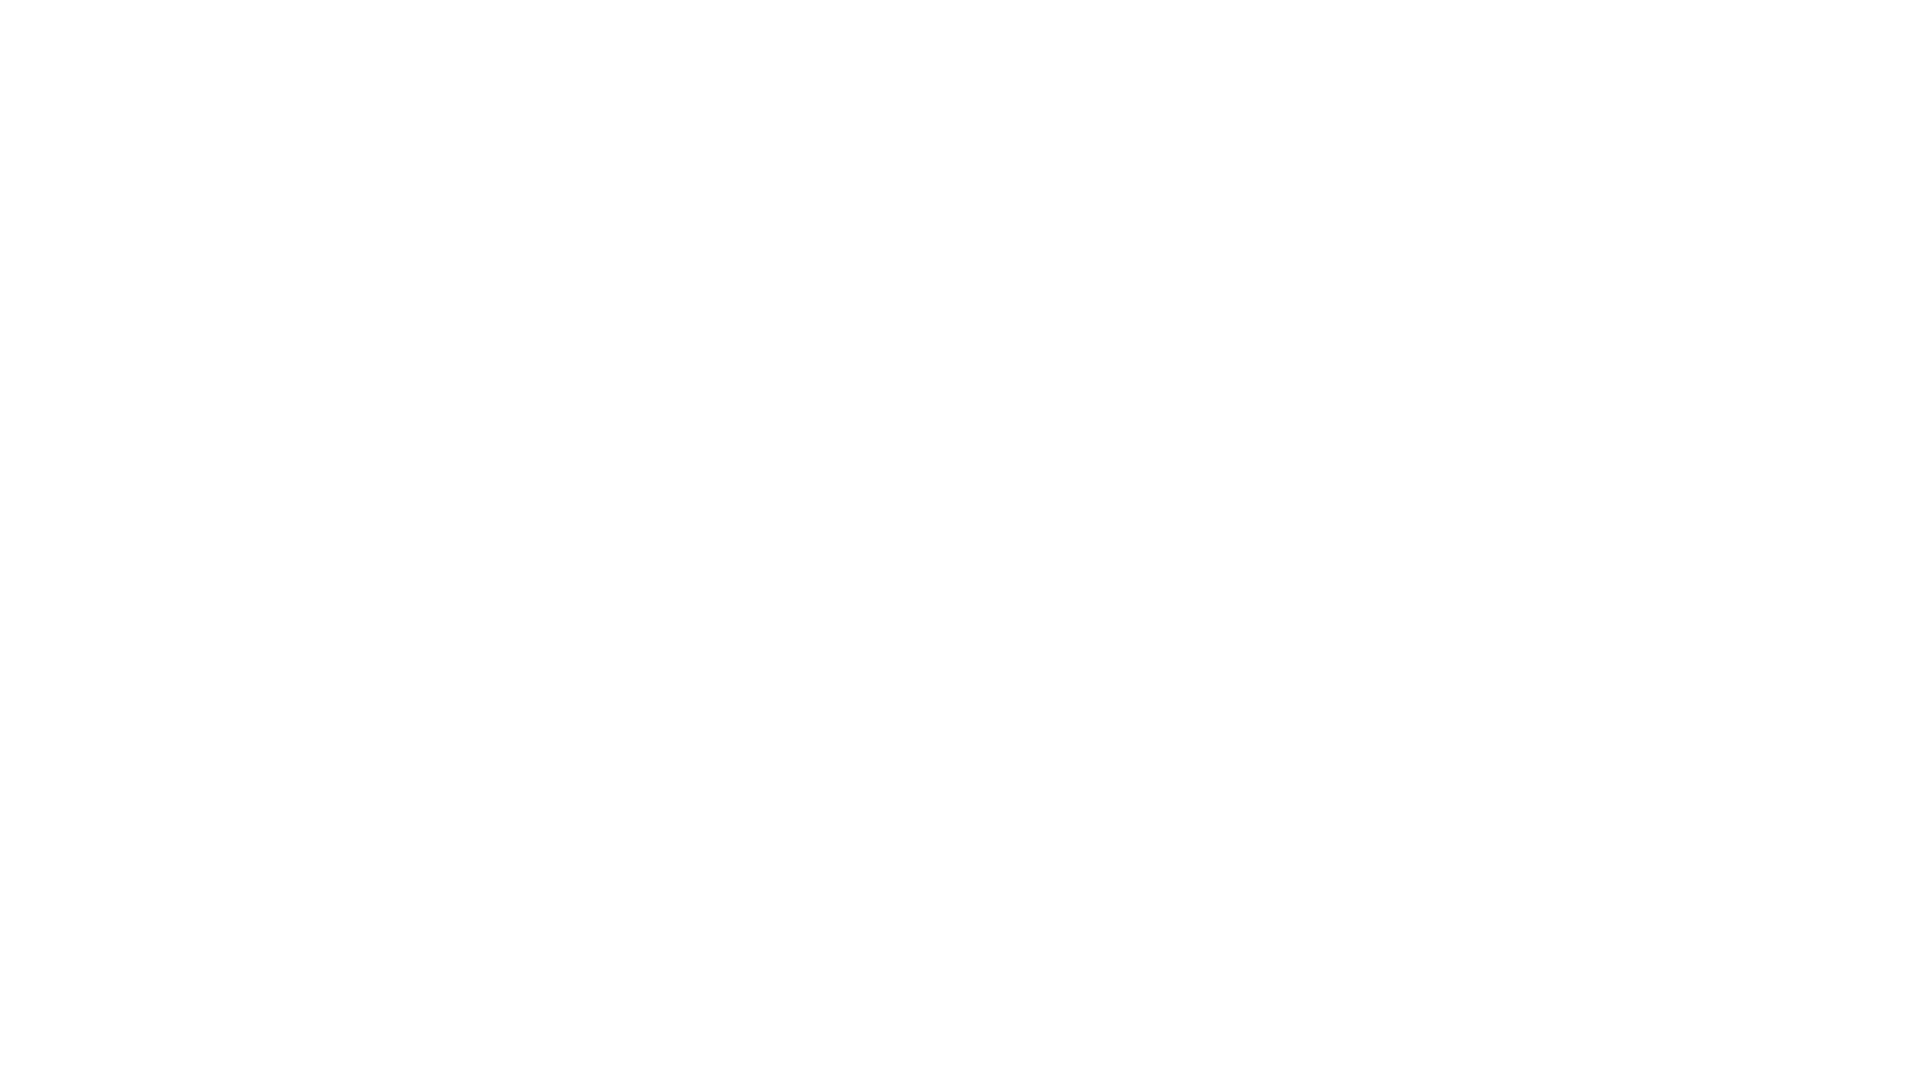 SEE HENDO